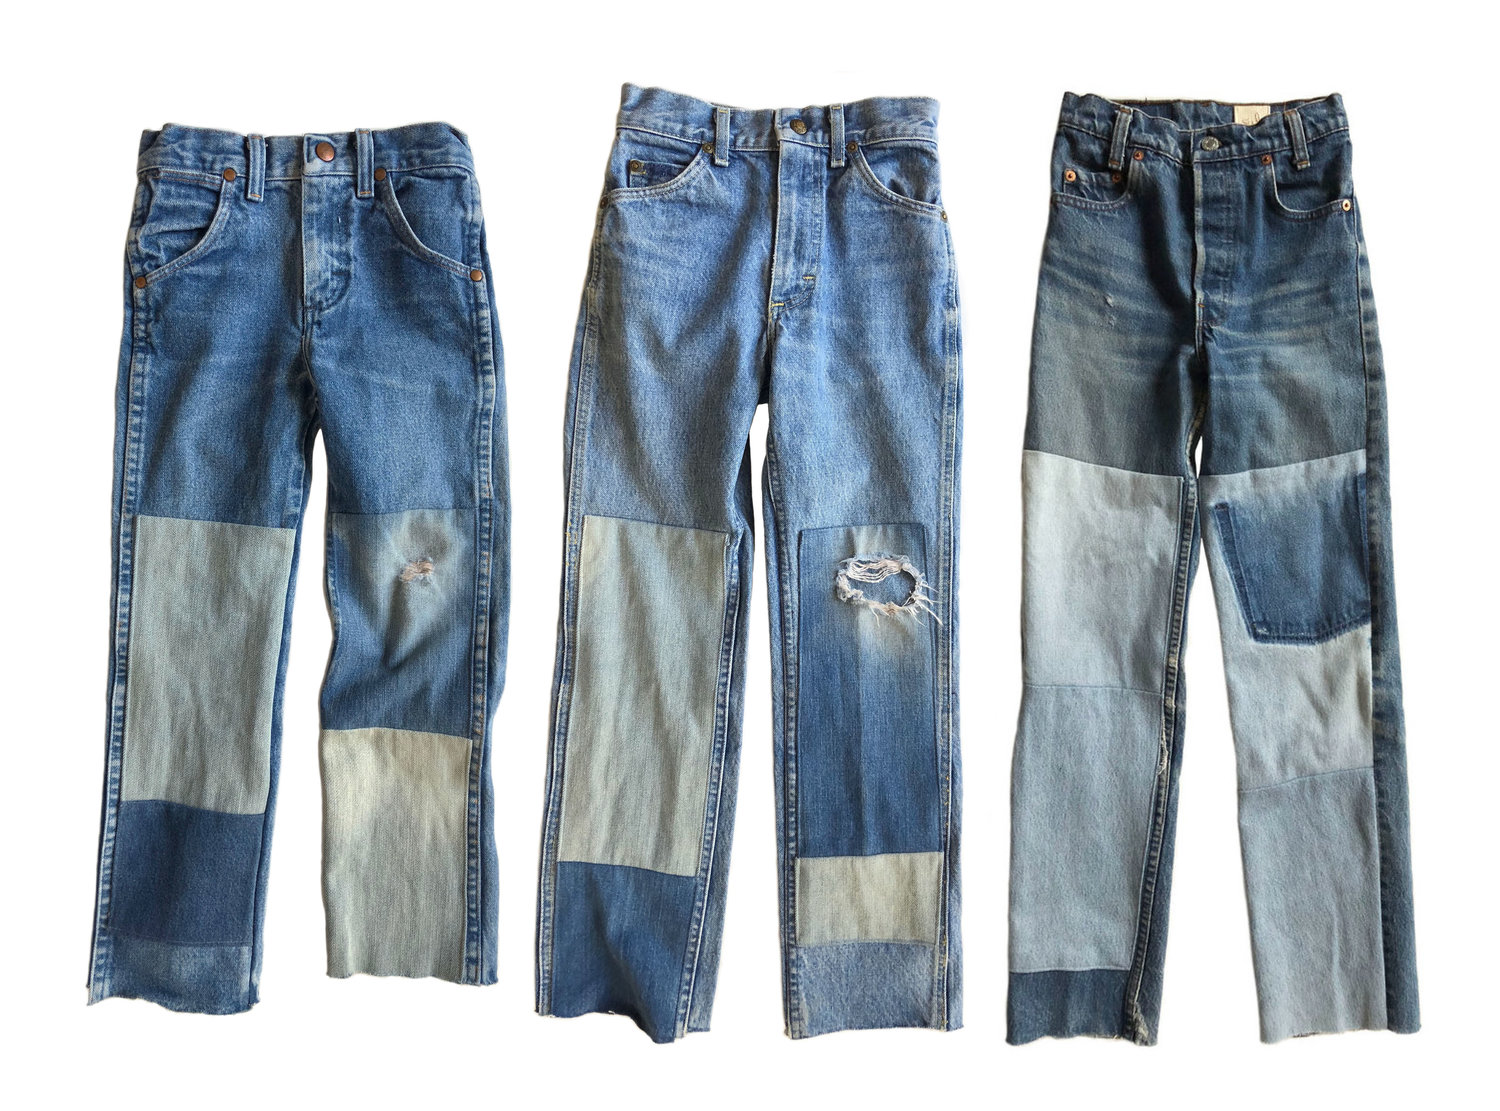 STEVIE / REWORKED DENIM - one of kind reworked jeans — NYC